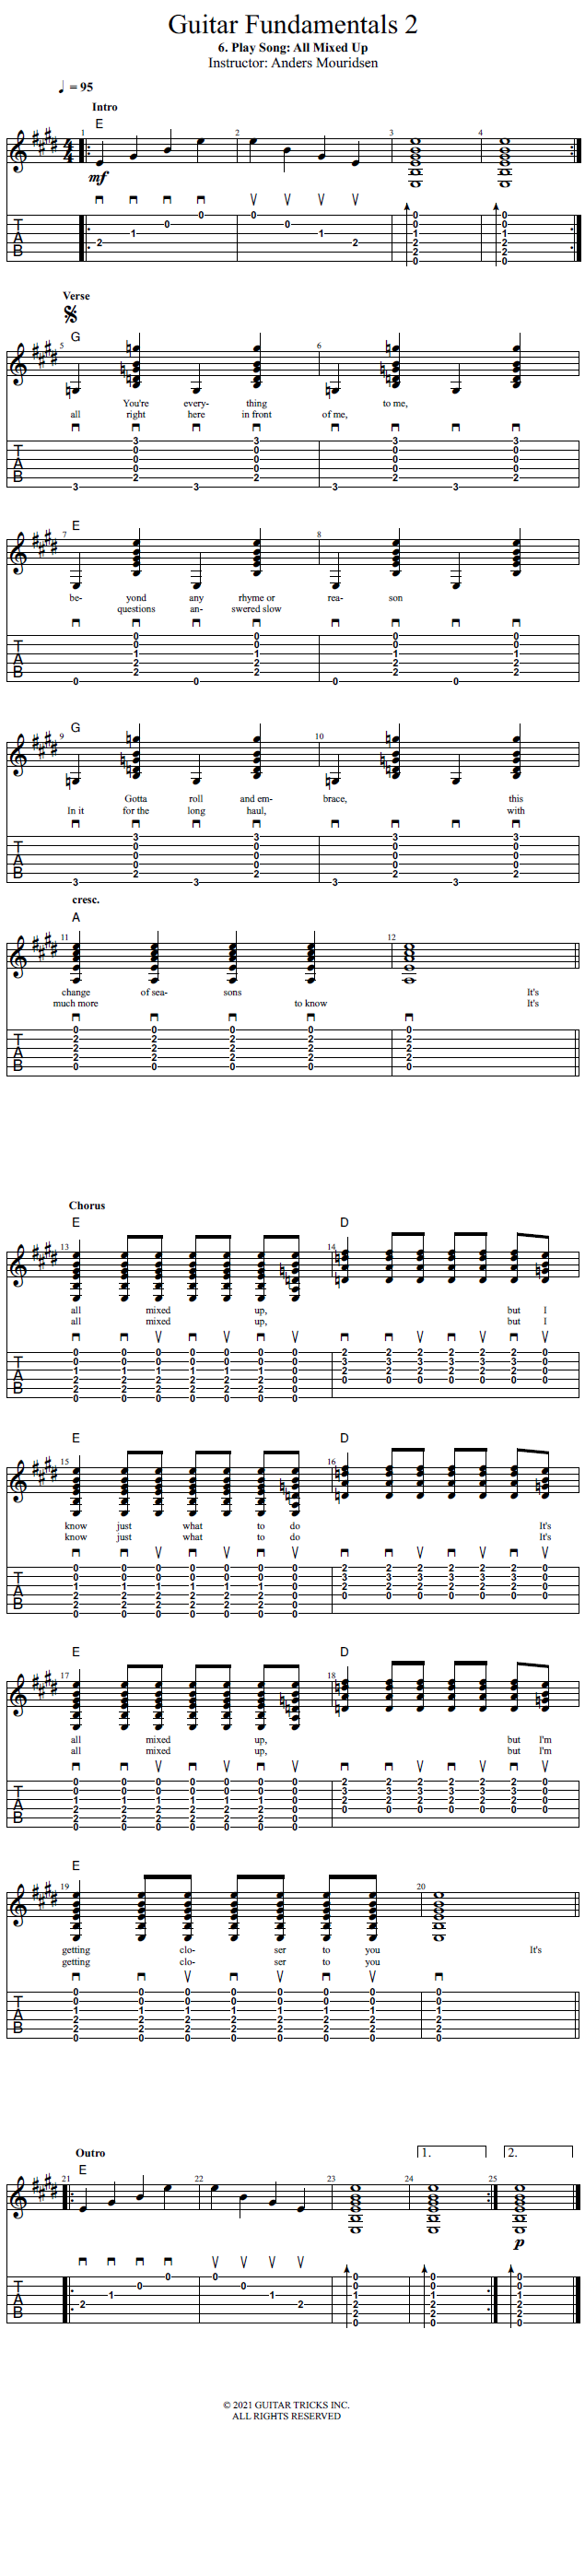 Play Song: All Mixed Up song notation